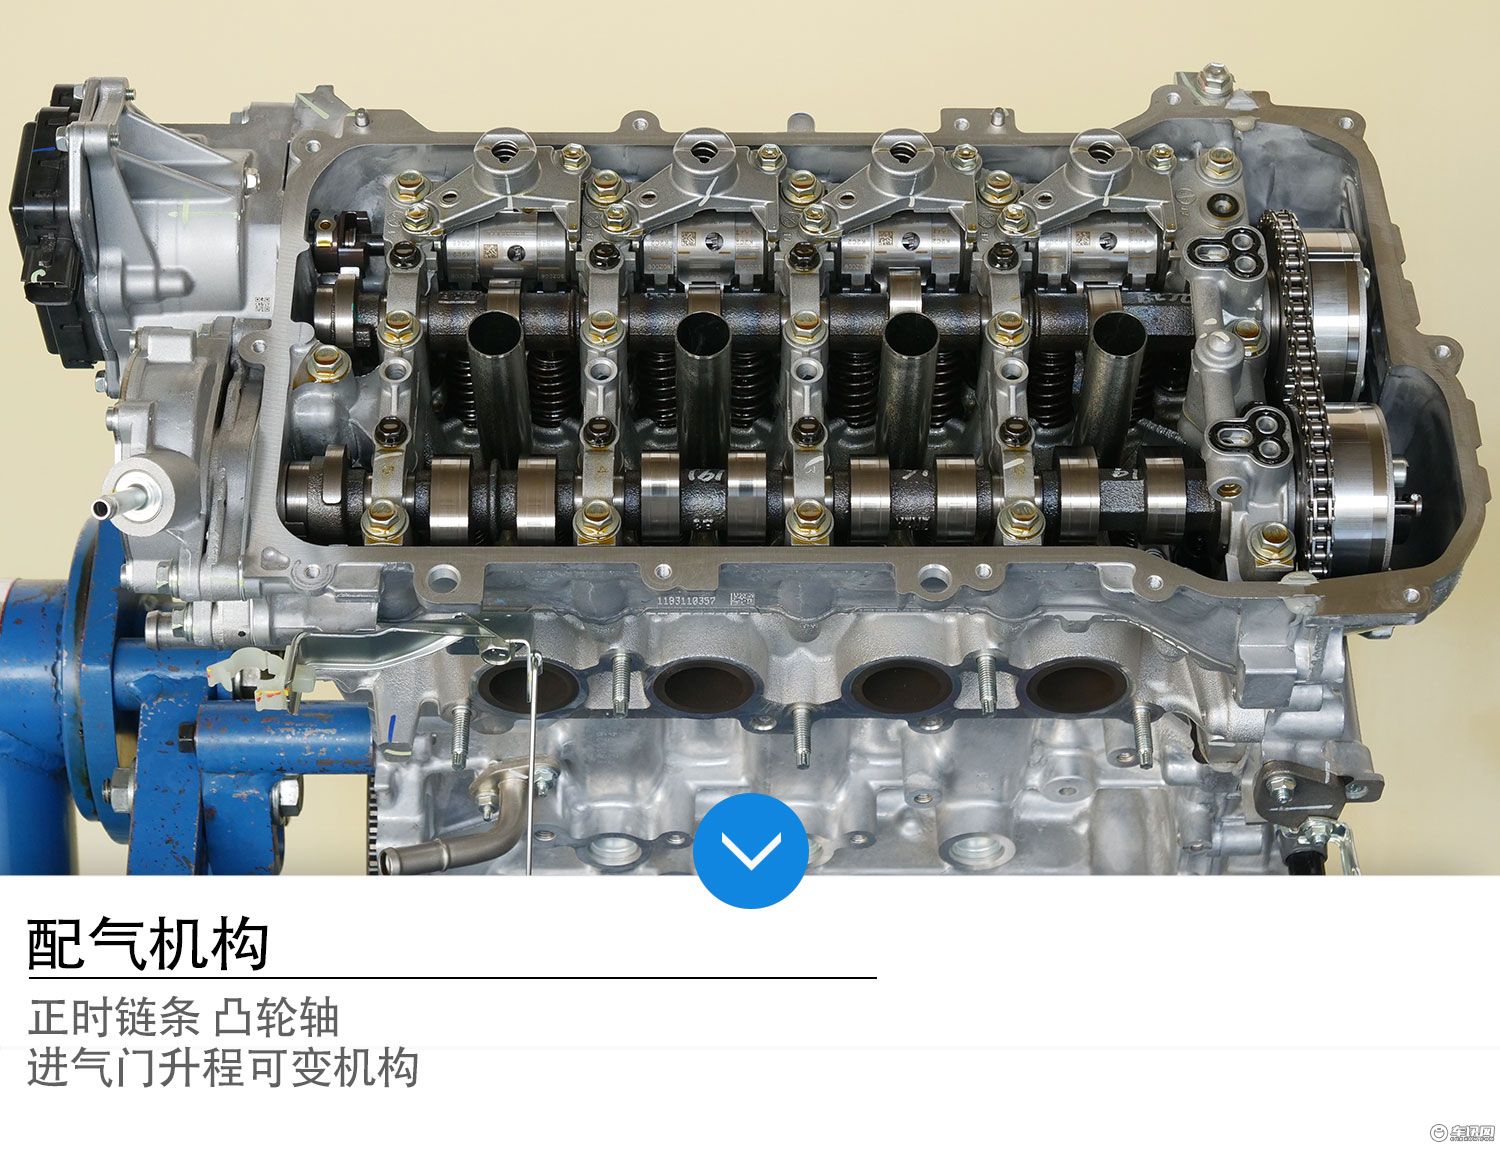 0l发动机拆解 丰田在自吸发动机方面有哪些独门绝技?